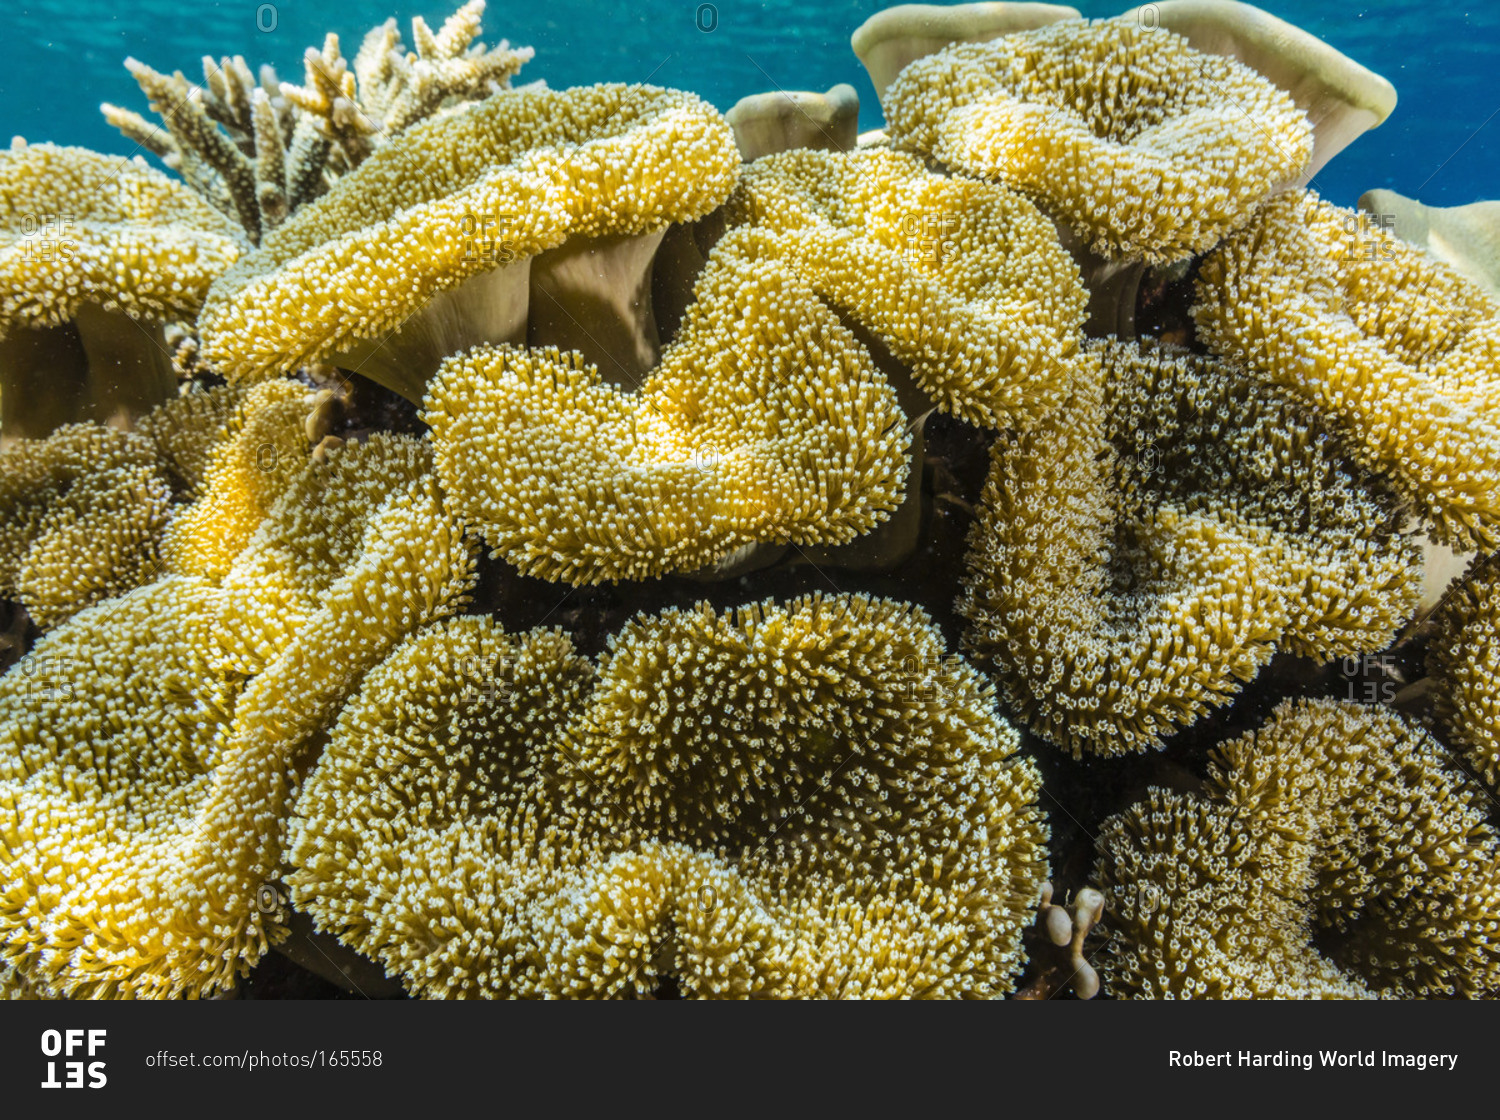 Hard and soft corals and reef fish underwater on Sebayur Island, Komodo Island National Park, Indonesia